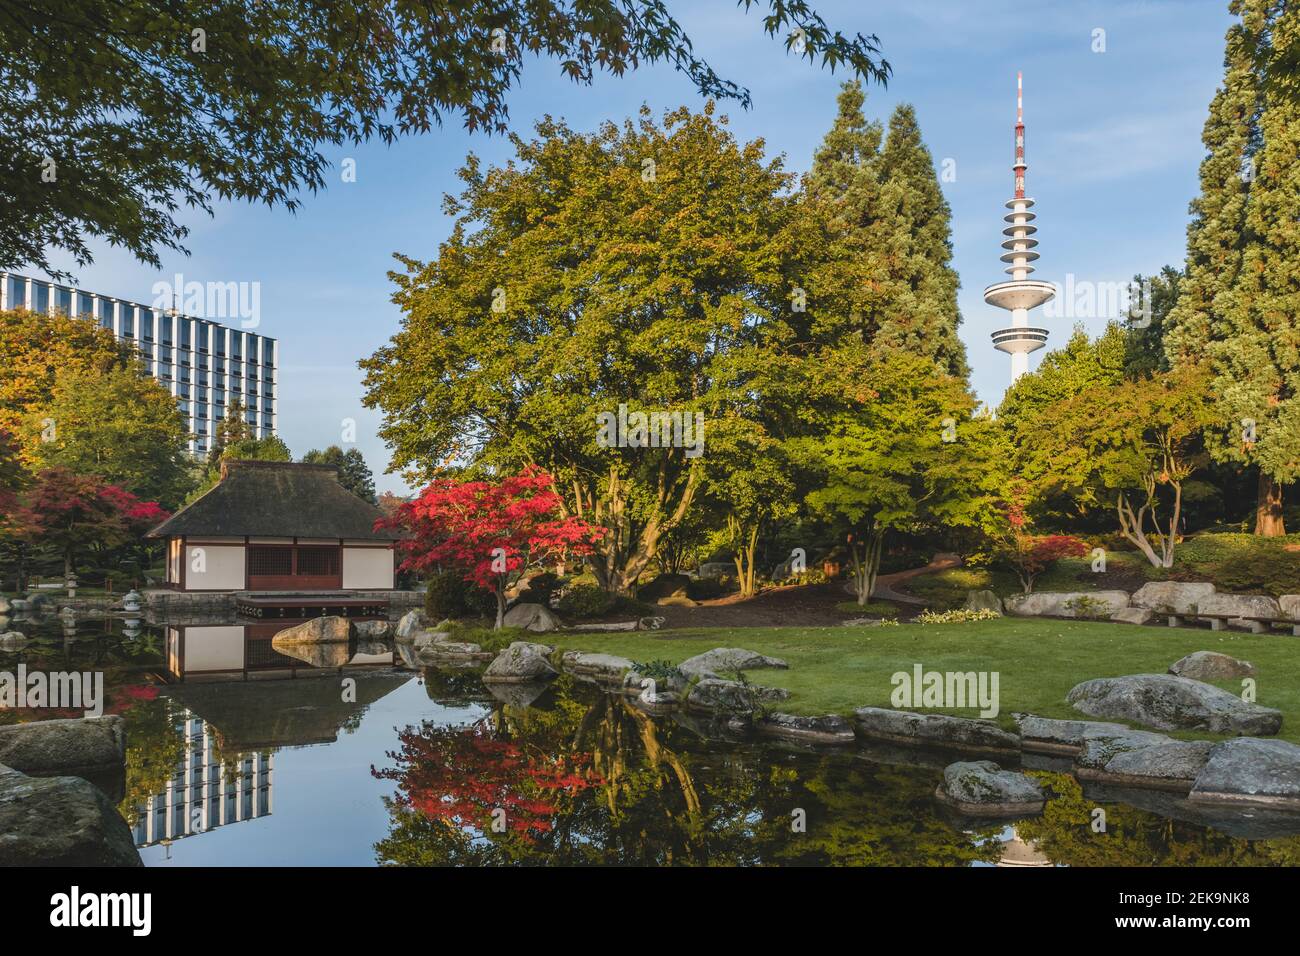 Germany, un Blomen public in autumn Stock Photo - Alamy